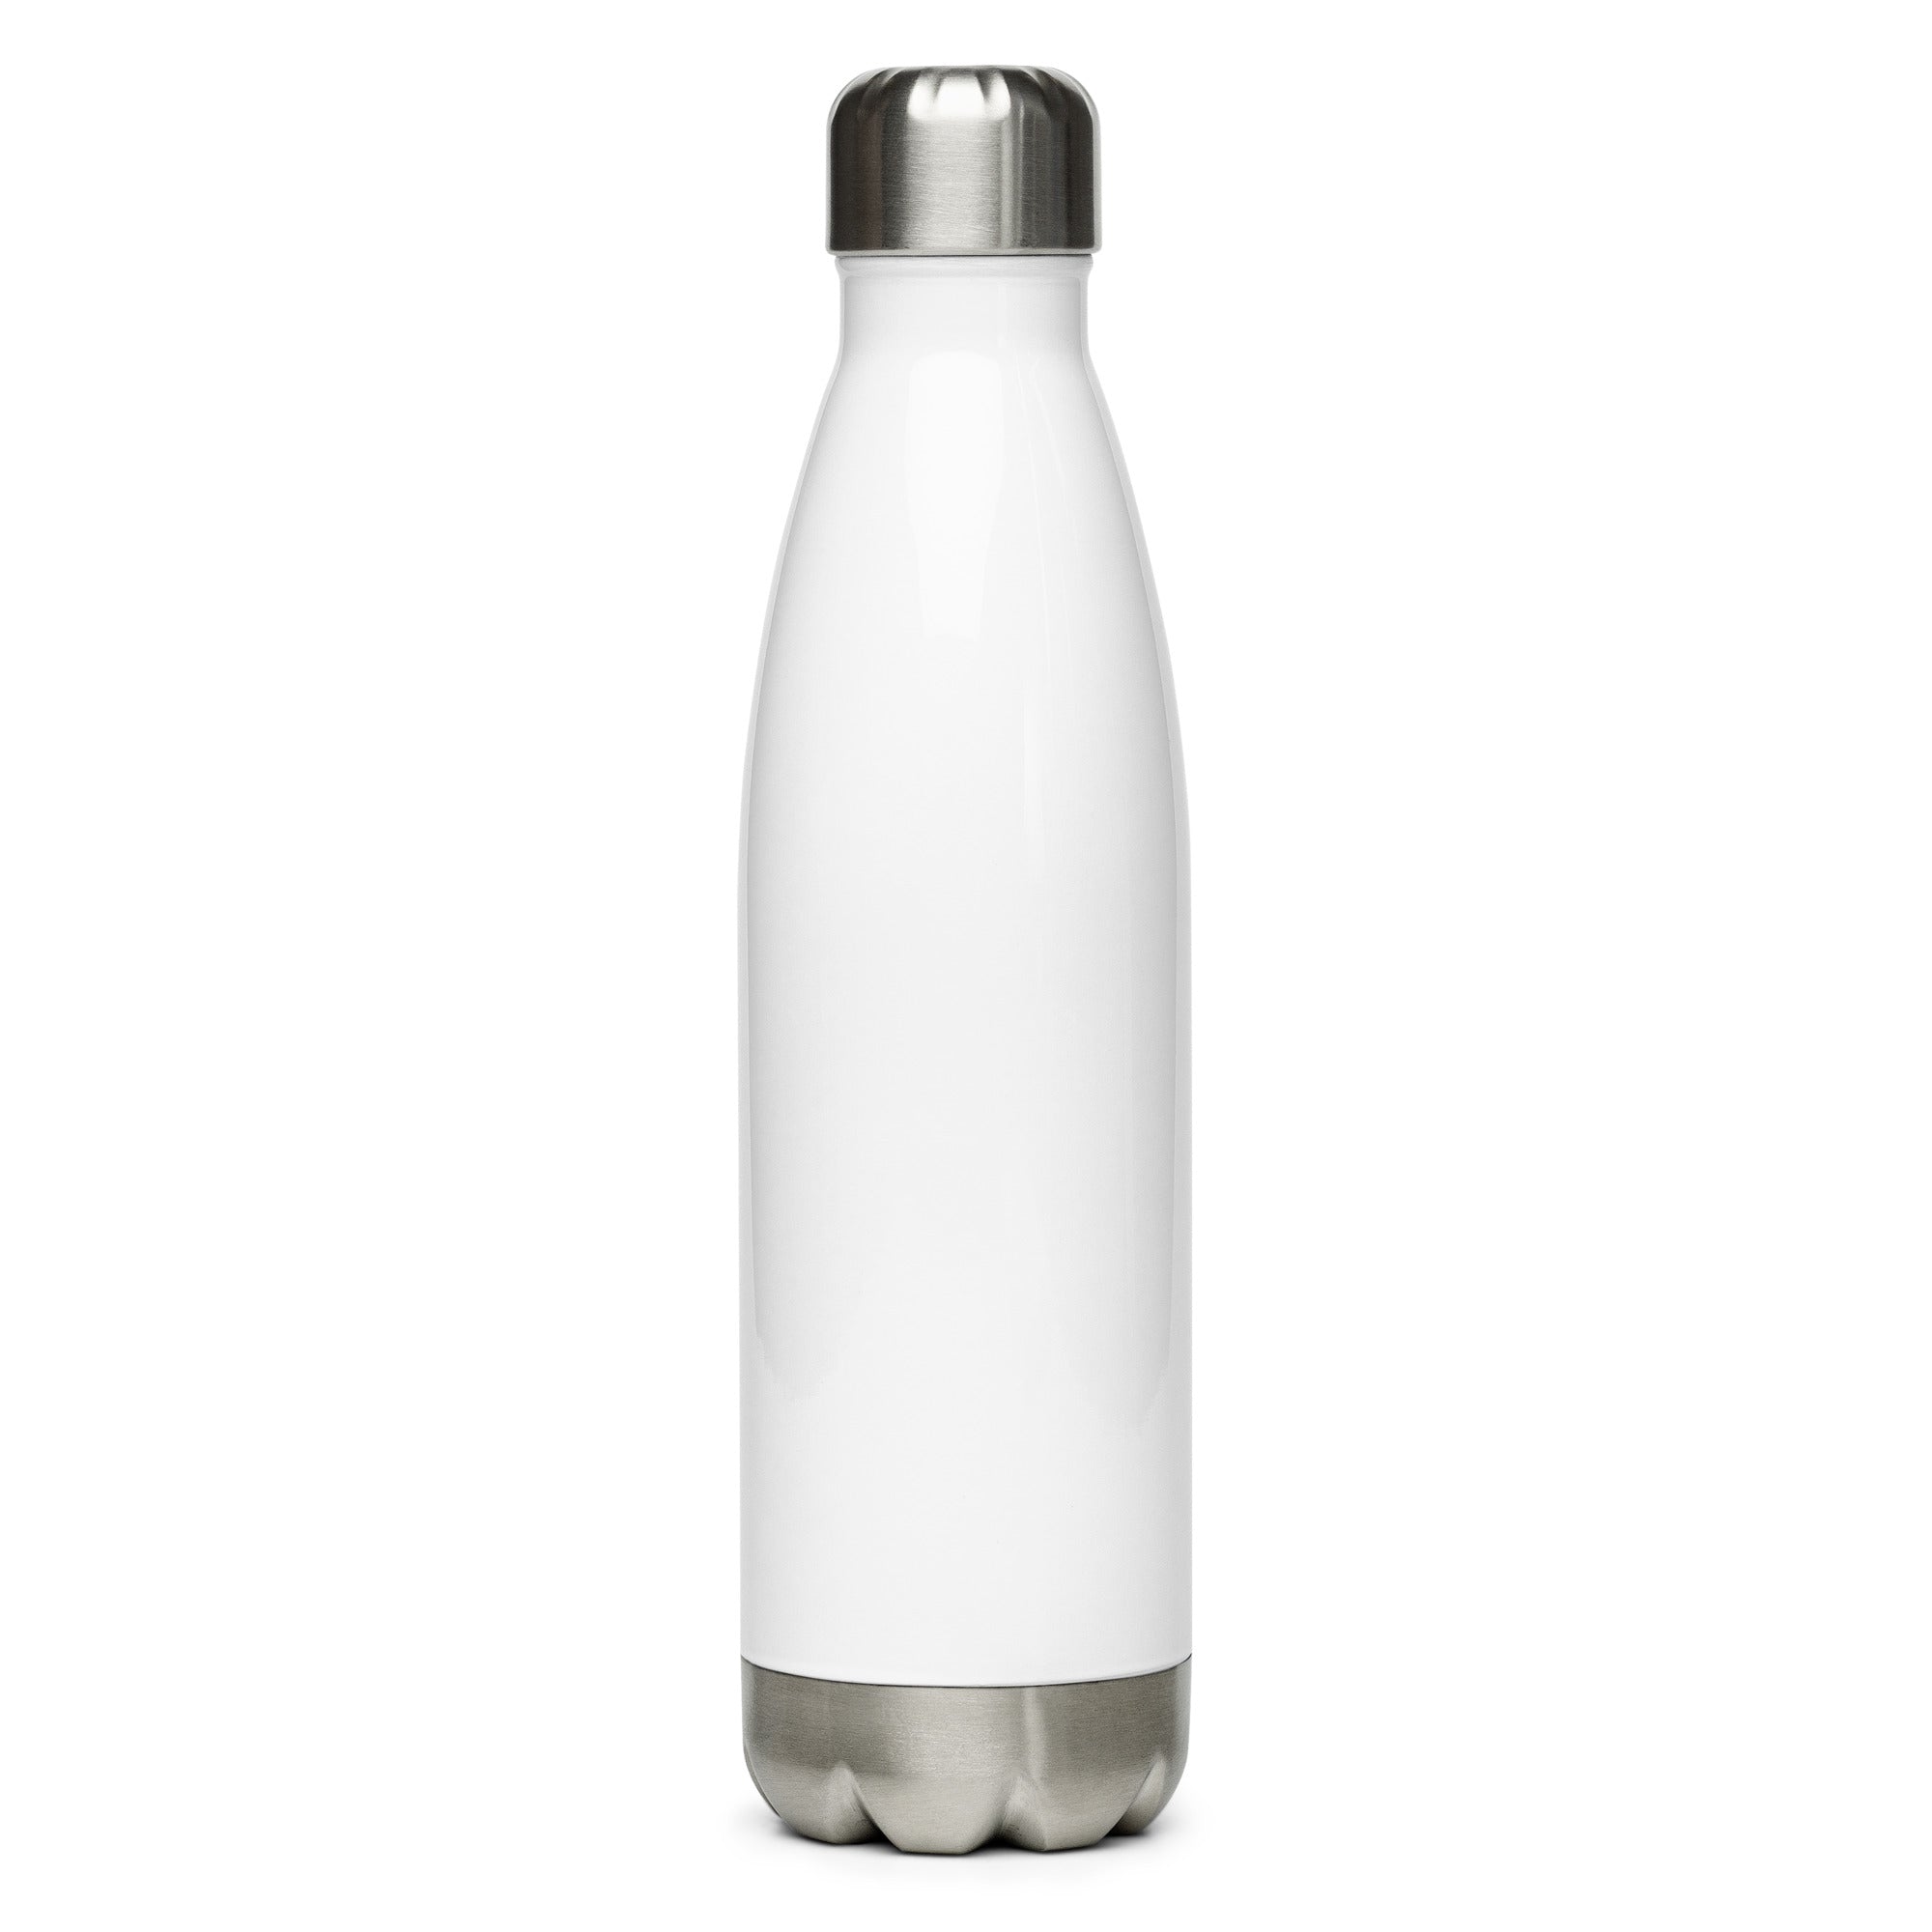 UI Stainless Steel Water Bottle